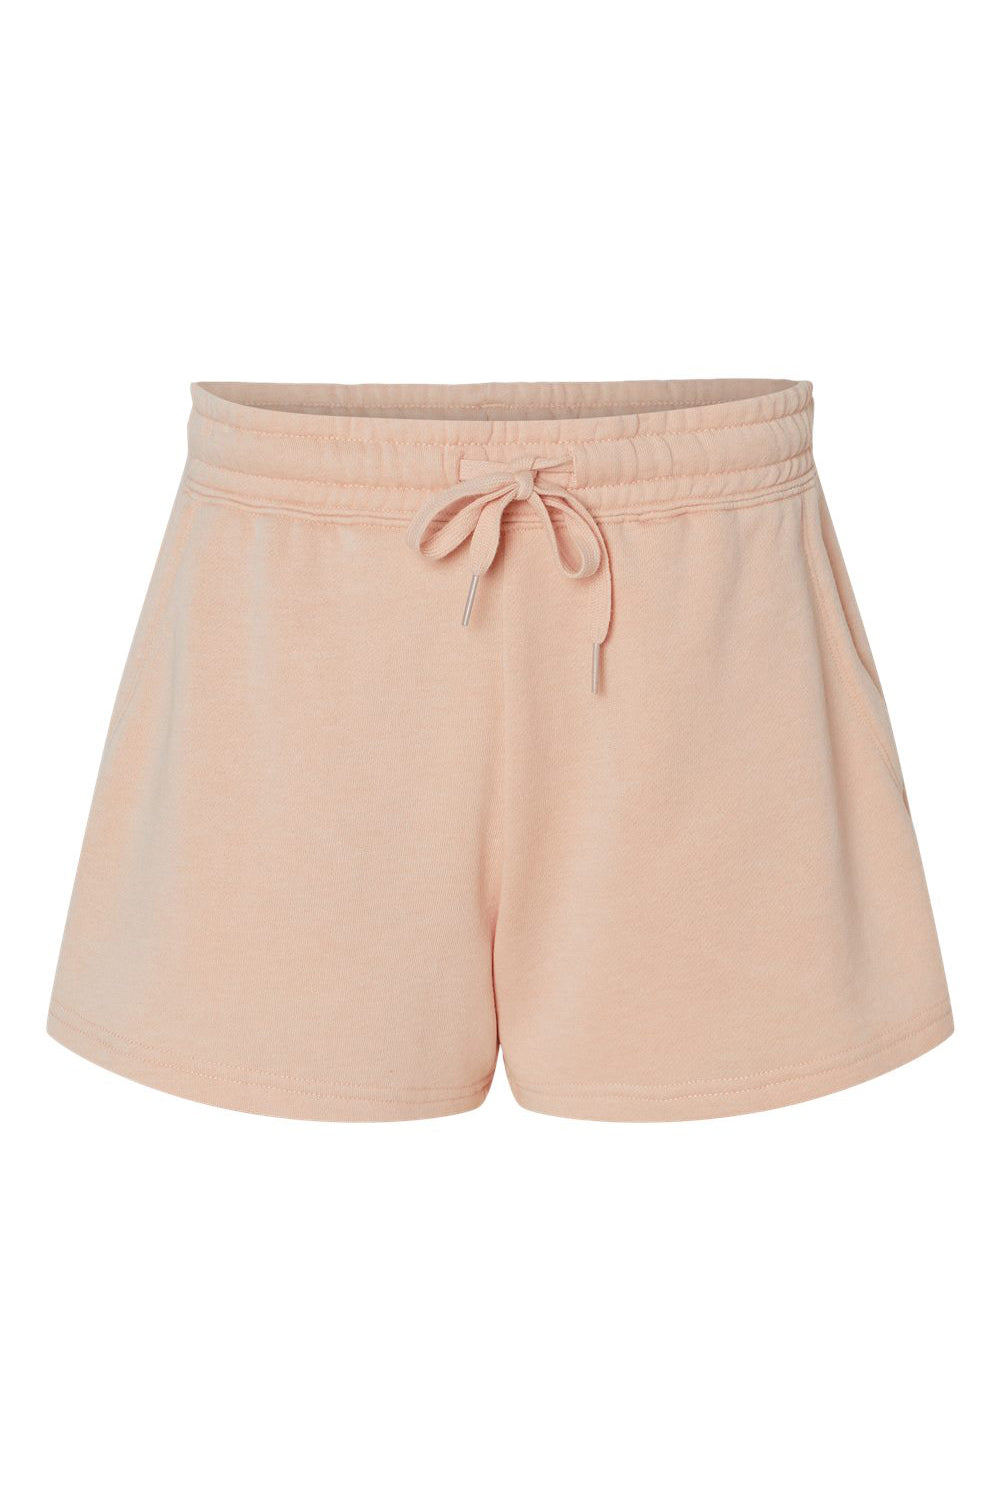 Independent Trading Co. PRM20SRT Womens California Wave Wash Fleece Shorts w/ Pockets Blush Flat Front